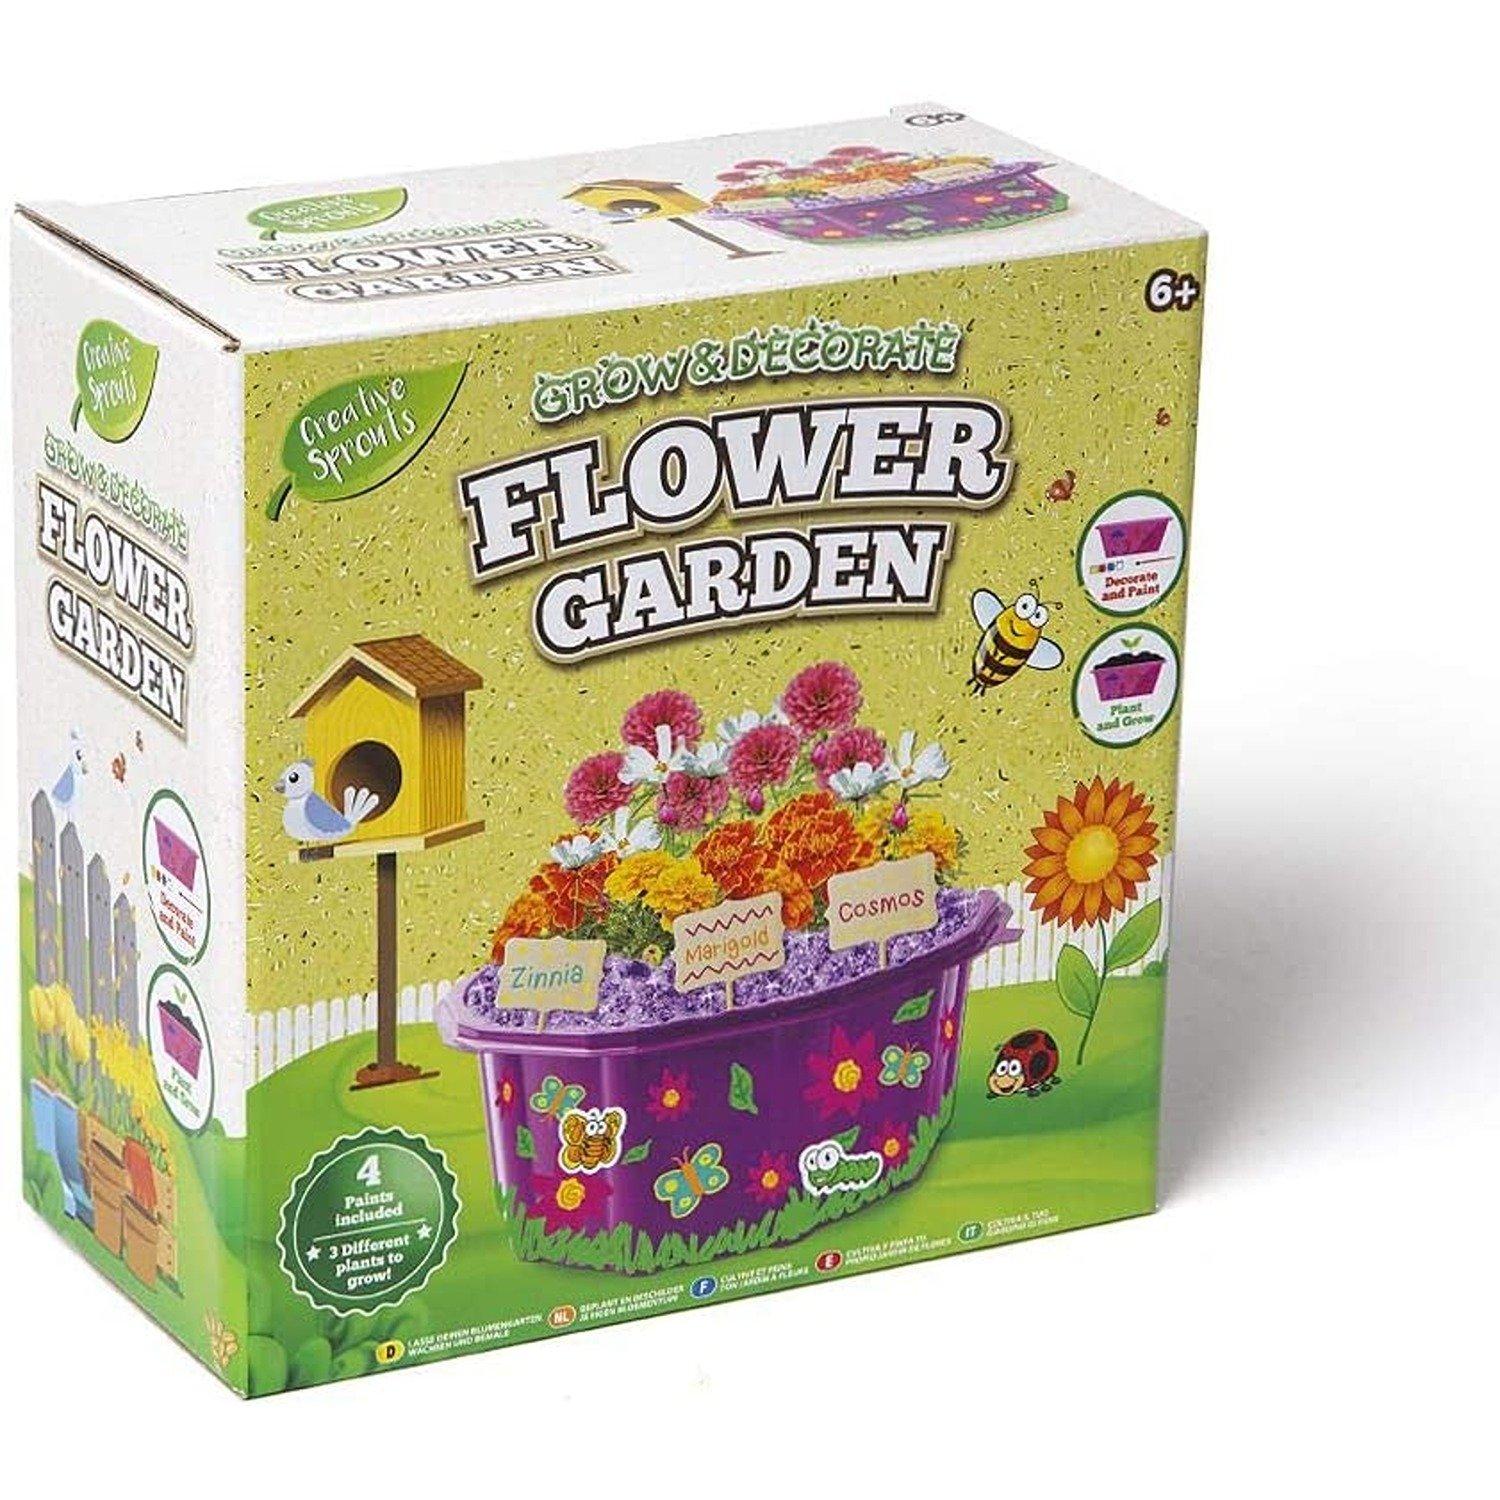 Grow & Decorate Your Own Flower Garden